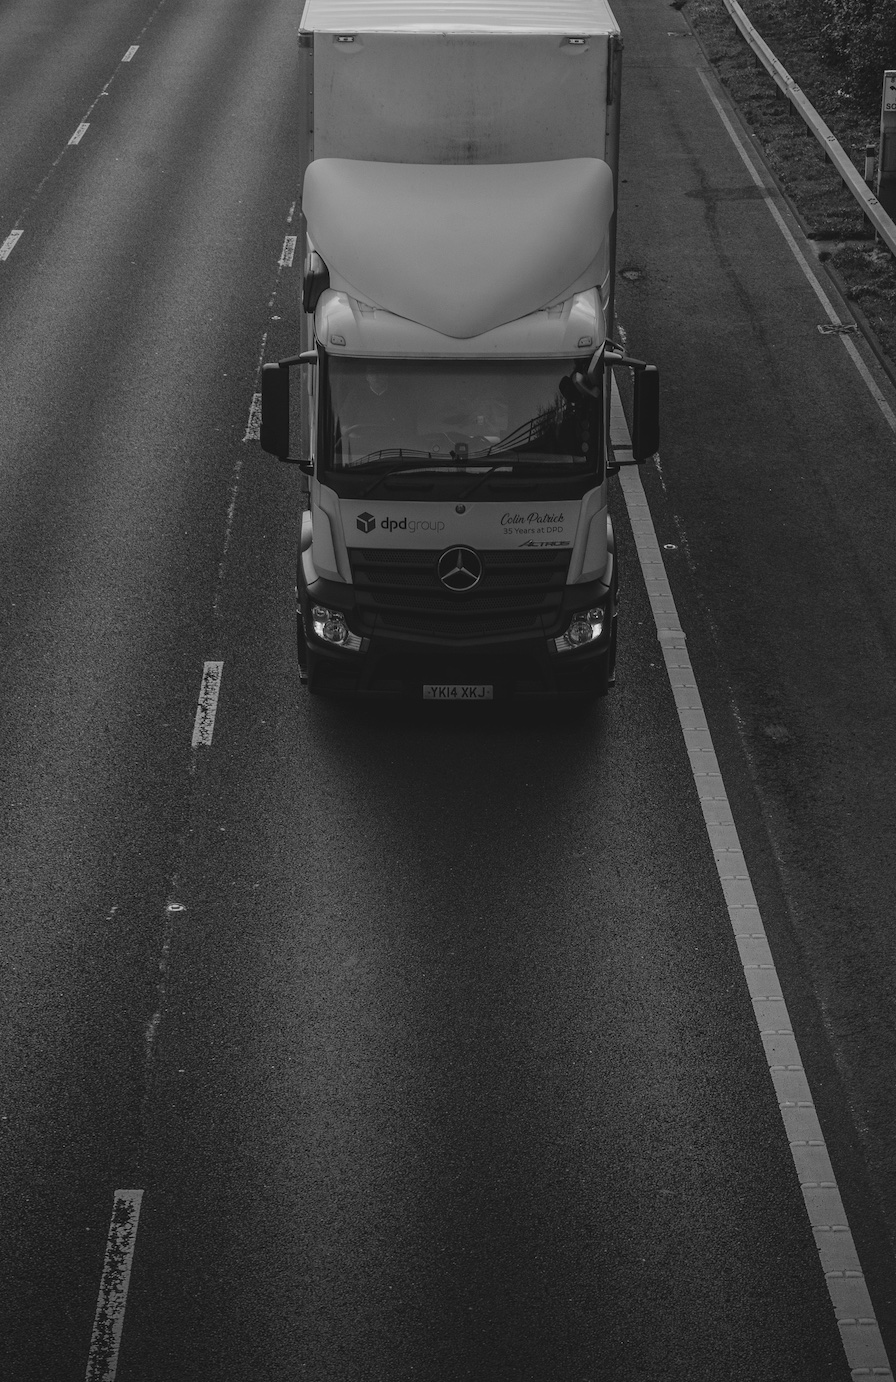 Grey scale semi-truck driving toward viewer; image by Dominic Egginton, via Unsplash.com.